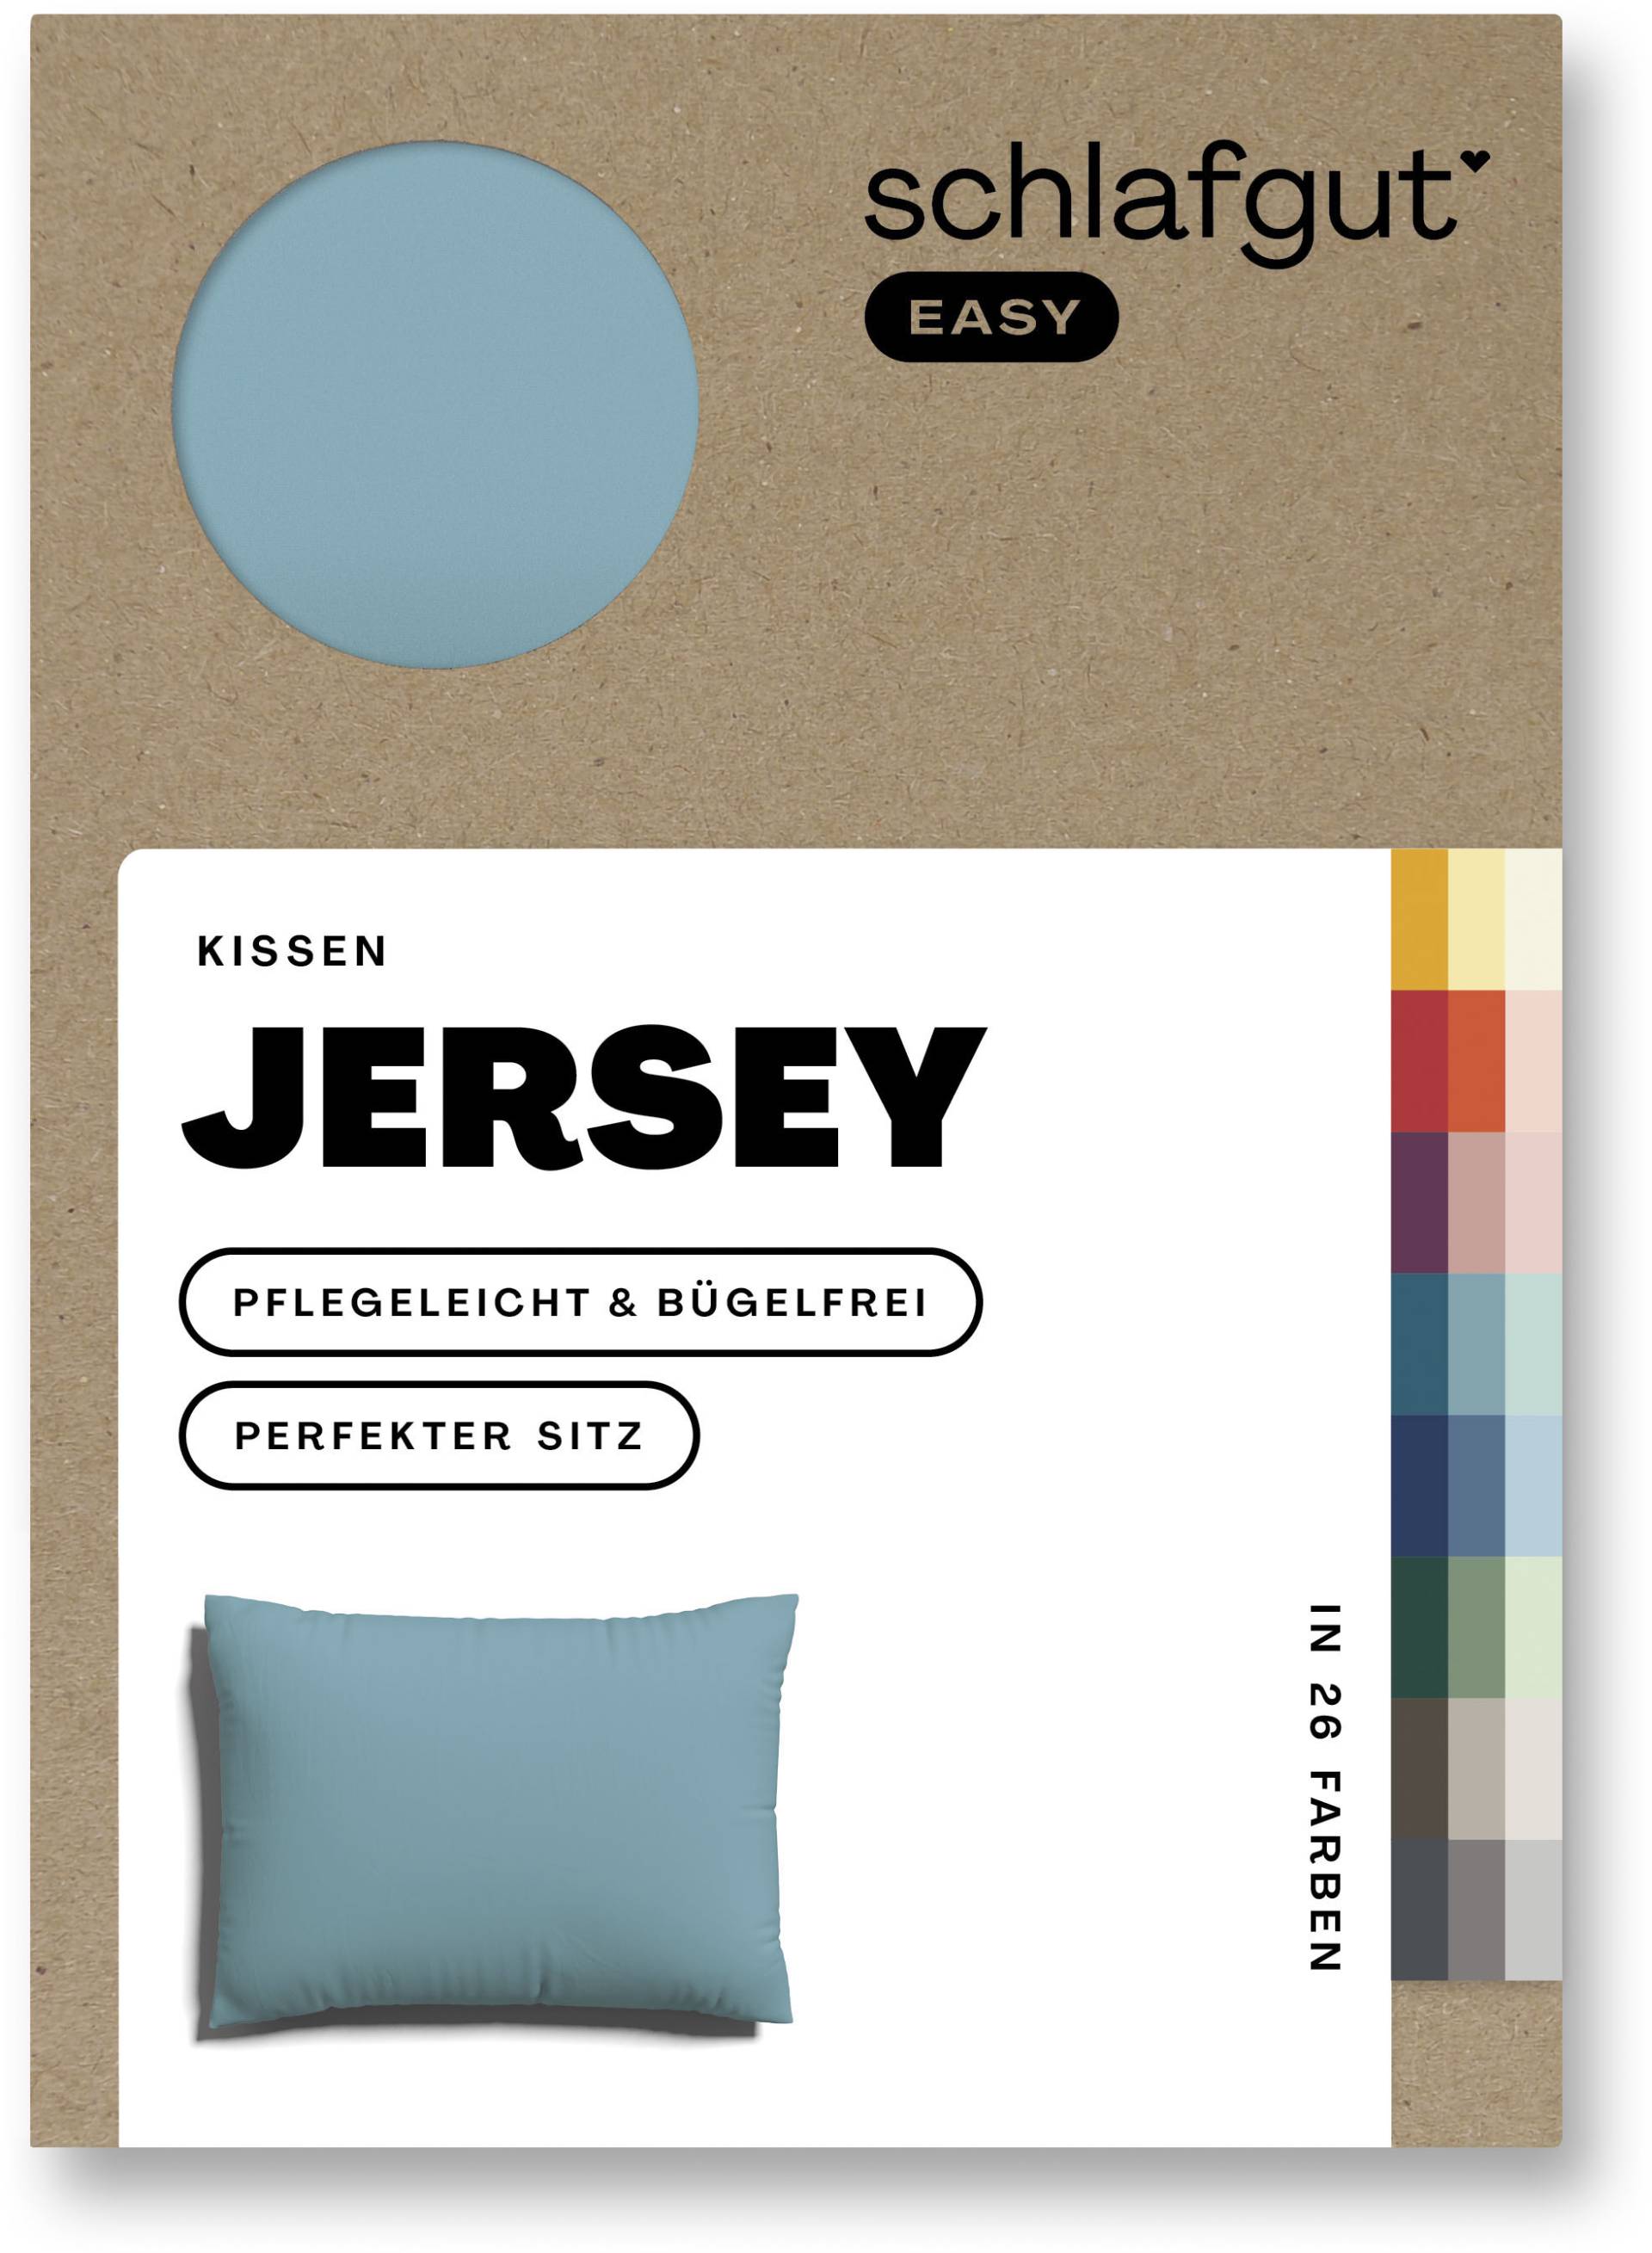 Schlafgut Kissenbezug »EASY Jersey«, (1 St.) von Schlafgut